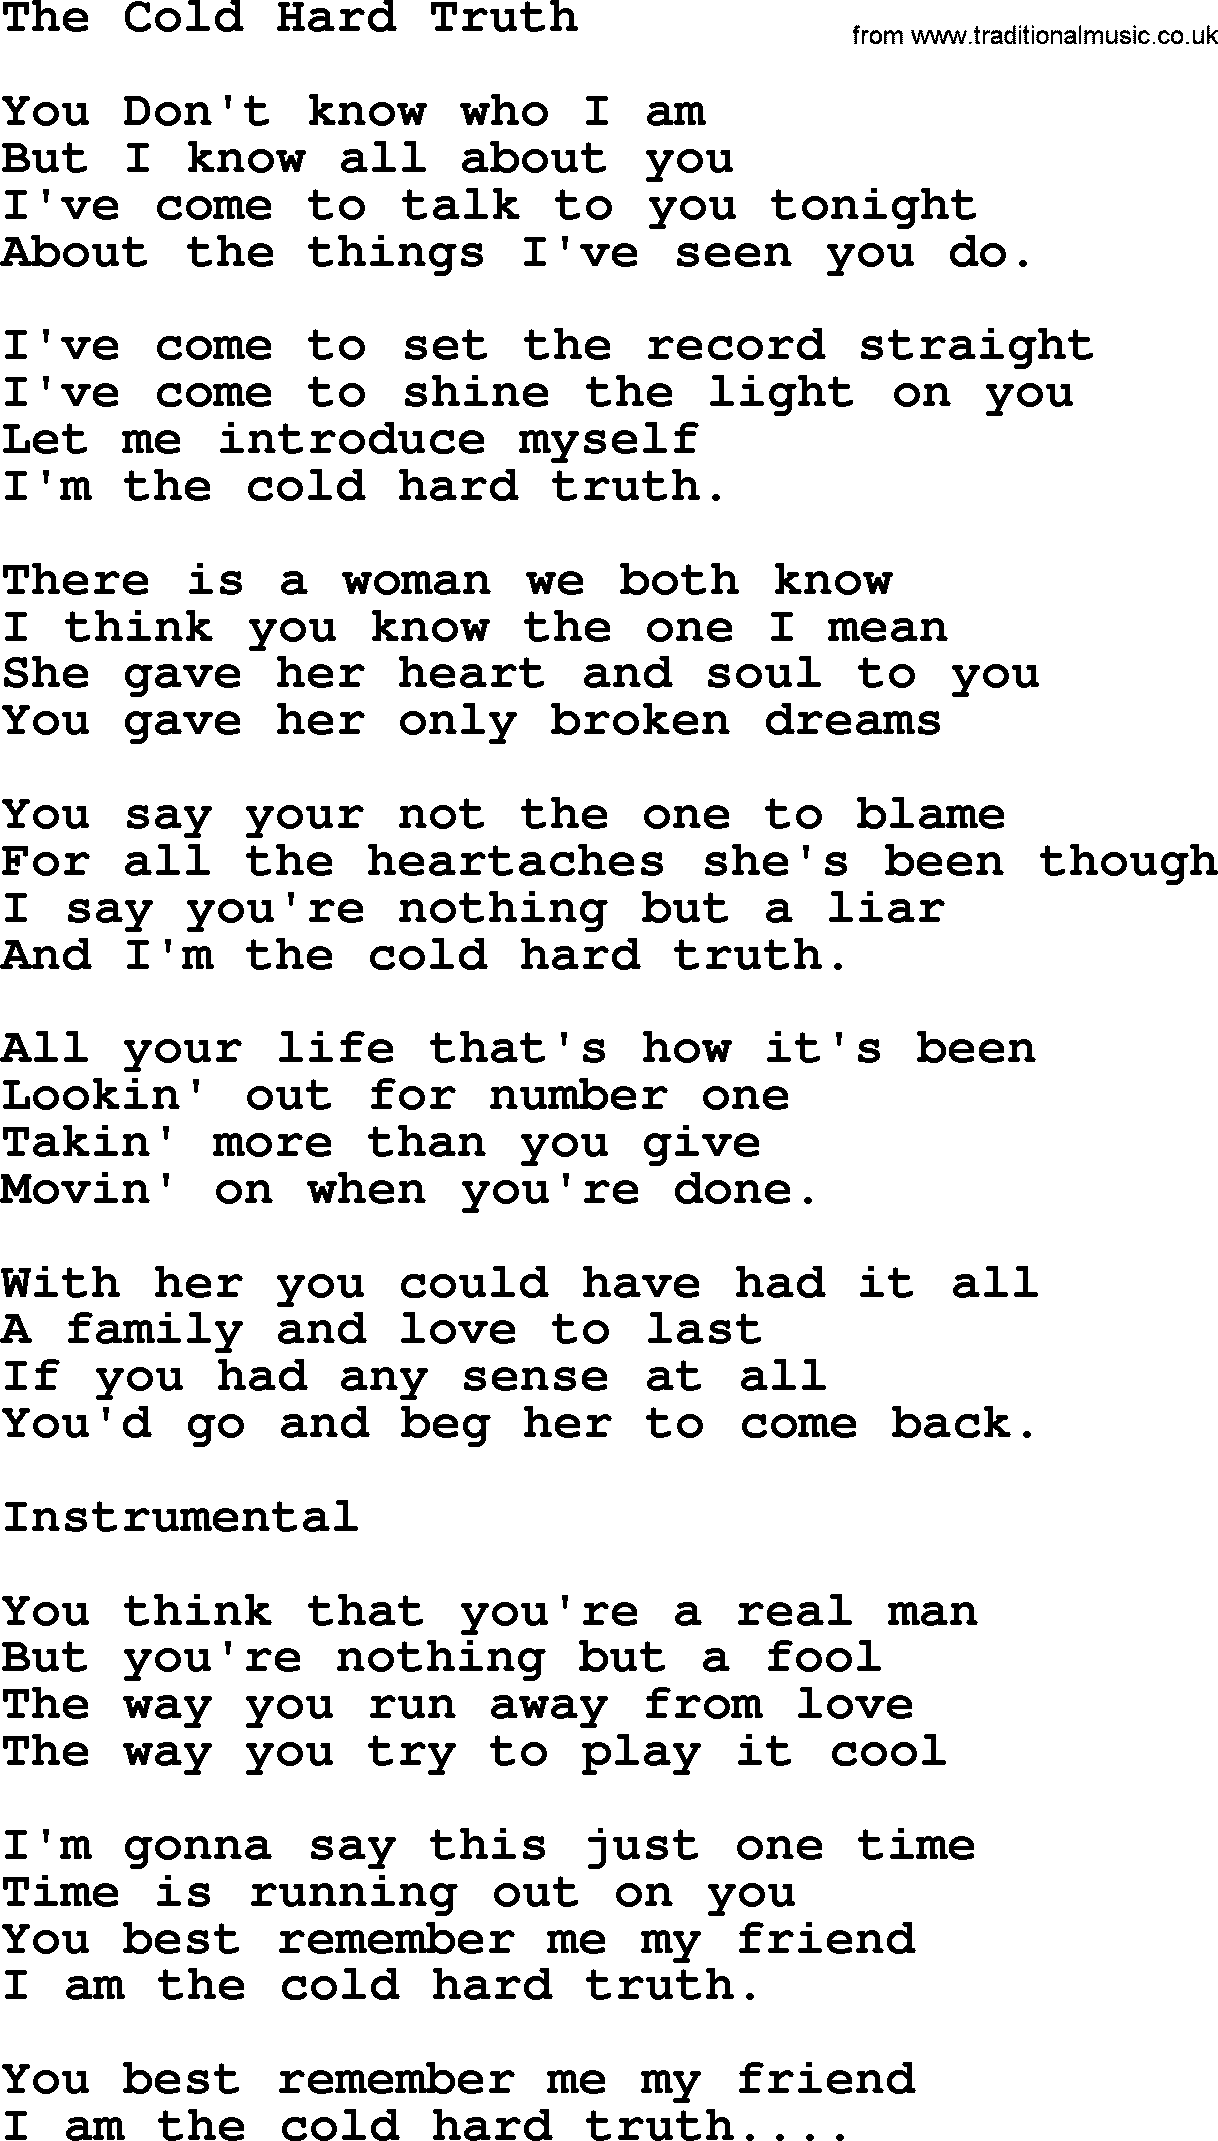 George Jones song: The Cold Hard Truth, lyrics